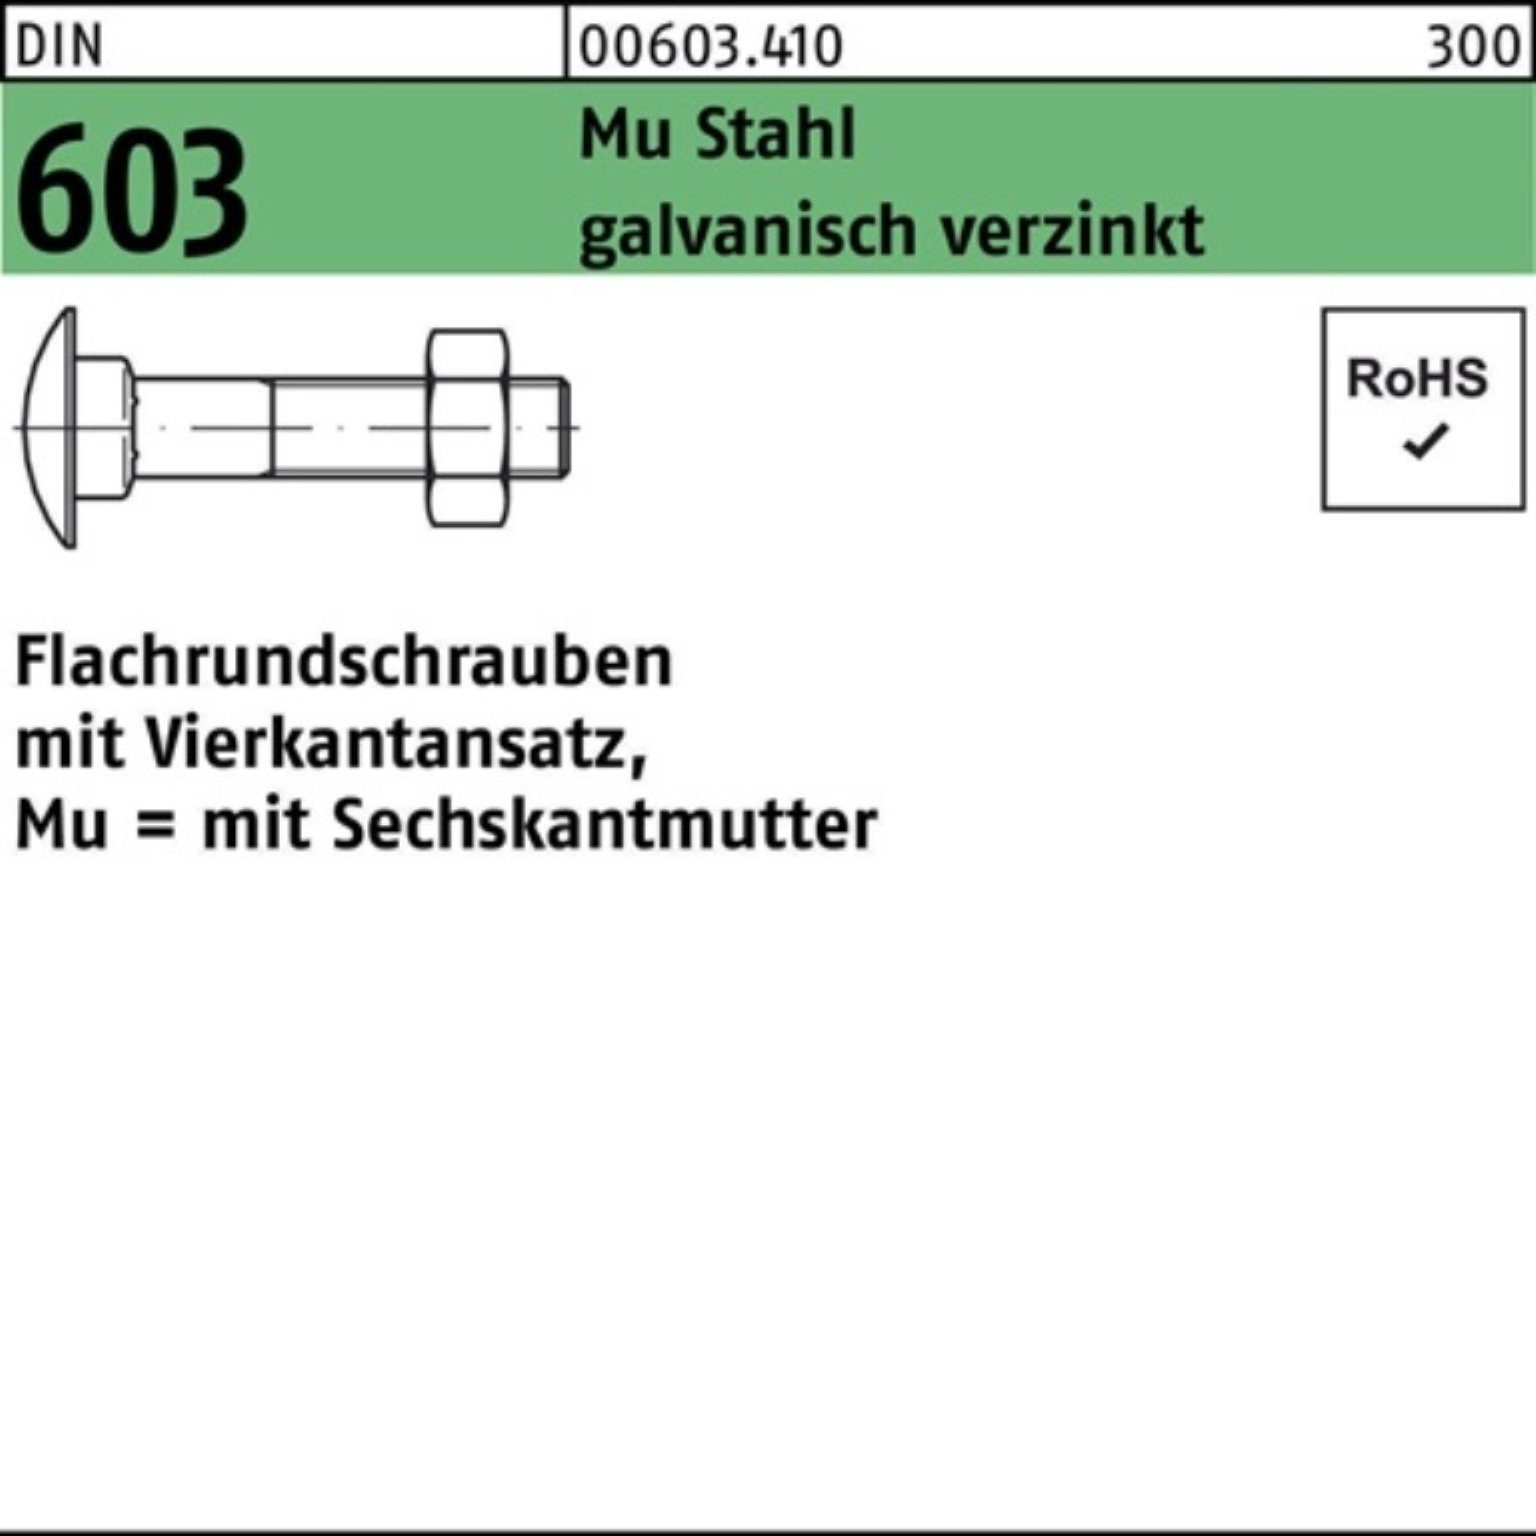 Vierkantansatz/6-ktmutter M 603 Pack Schraube Reyher M5x50 200er Flachrundschraube DIN